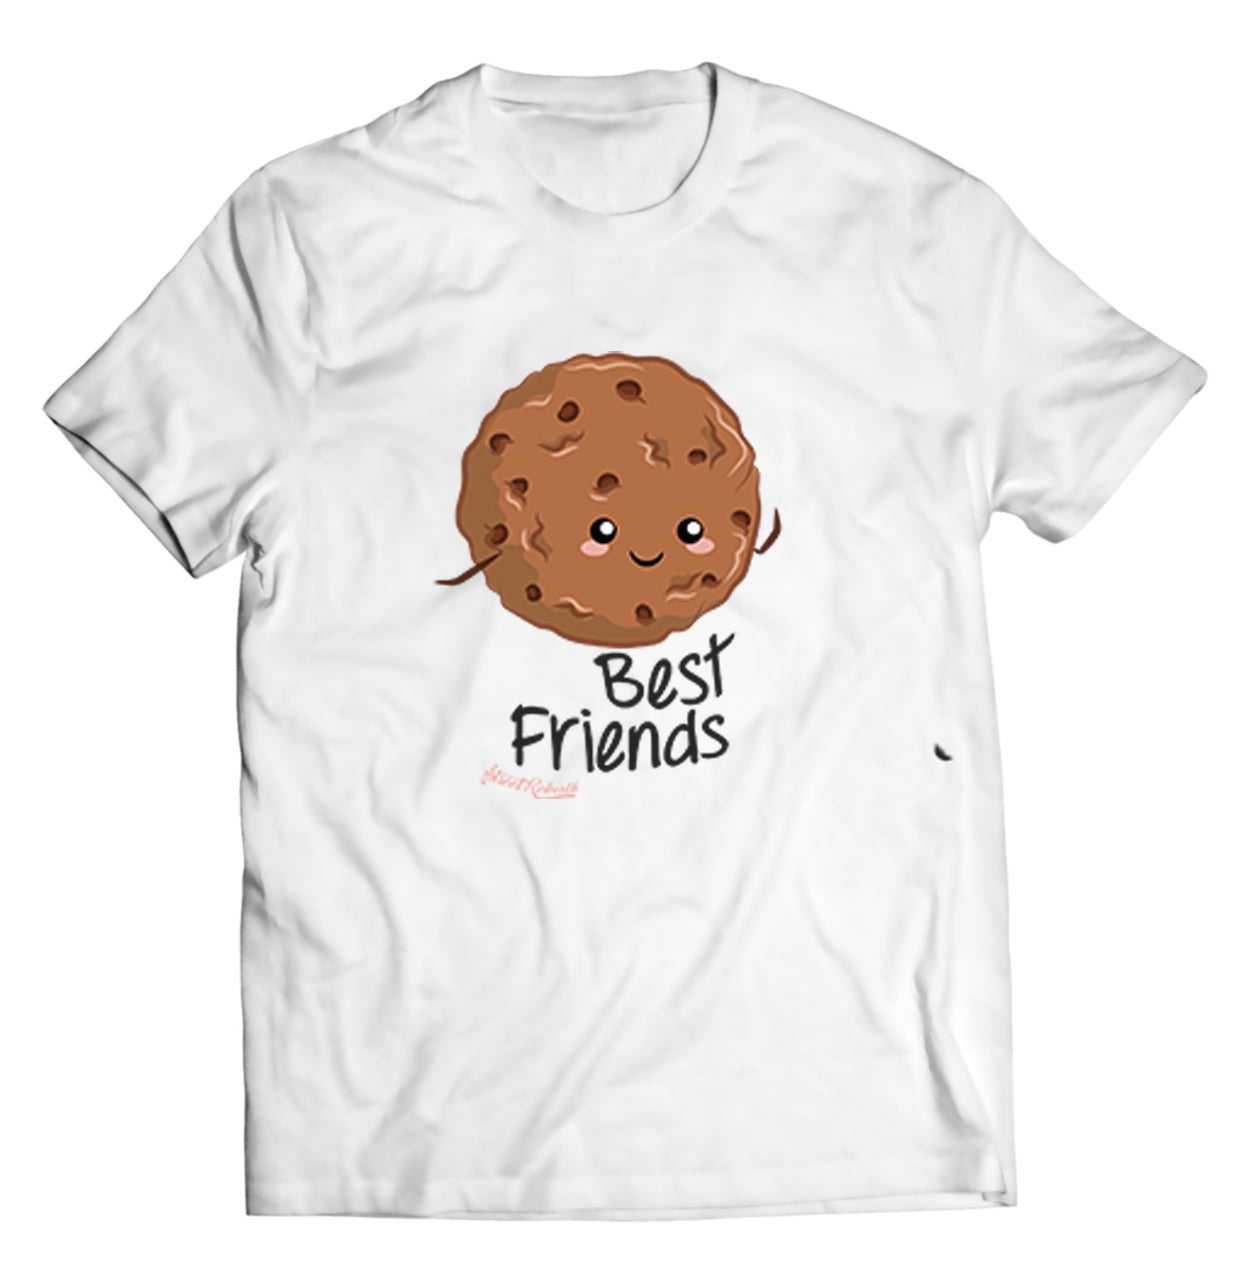 Best Friends Cookie PUN SHIRT - DIRECT TO GARMENT QUALITY PRINT - UNISEX SHIRT